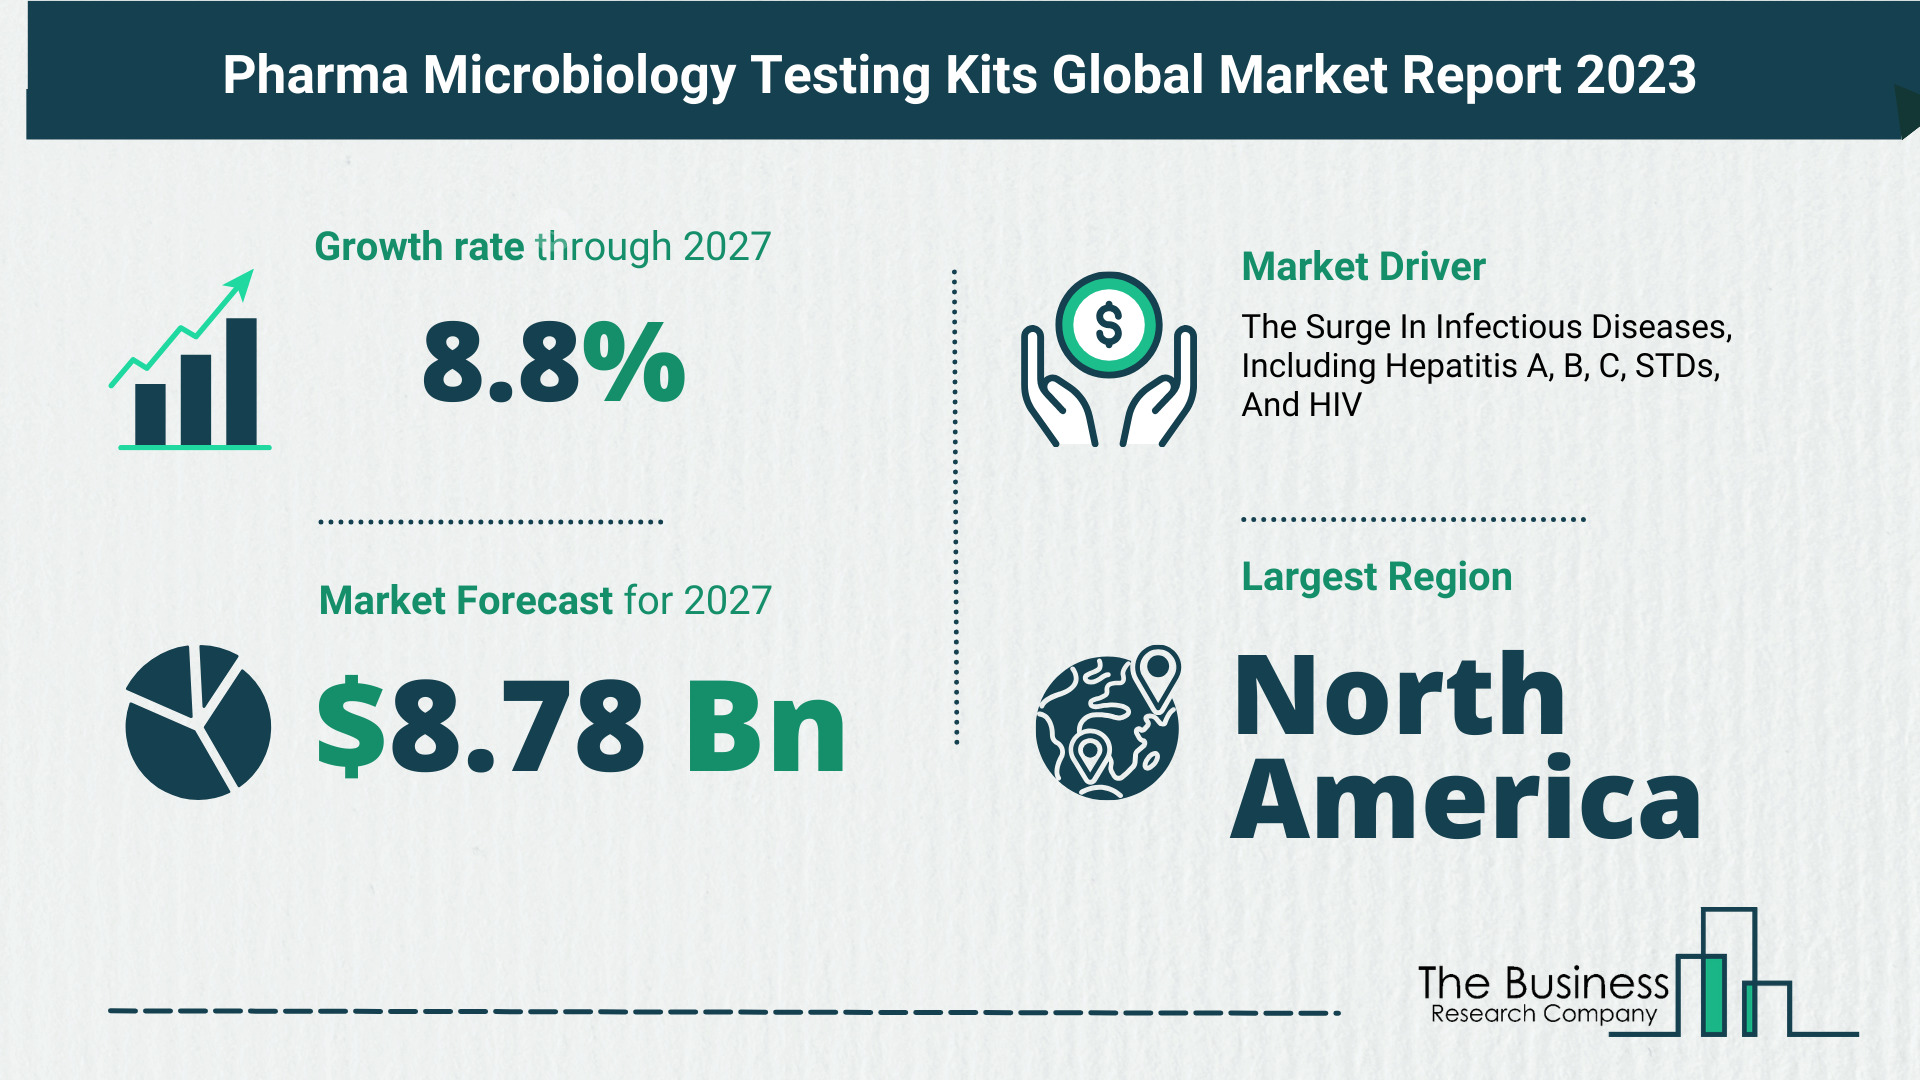 Global Pharma Microbiology Testing Kits Market